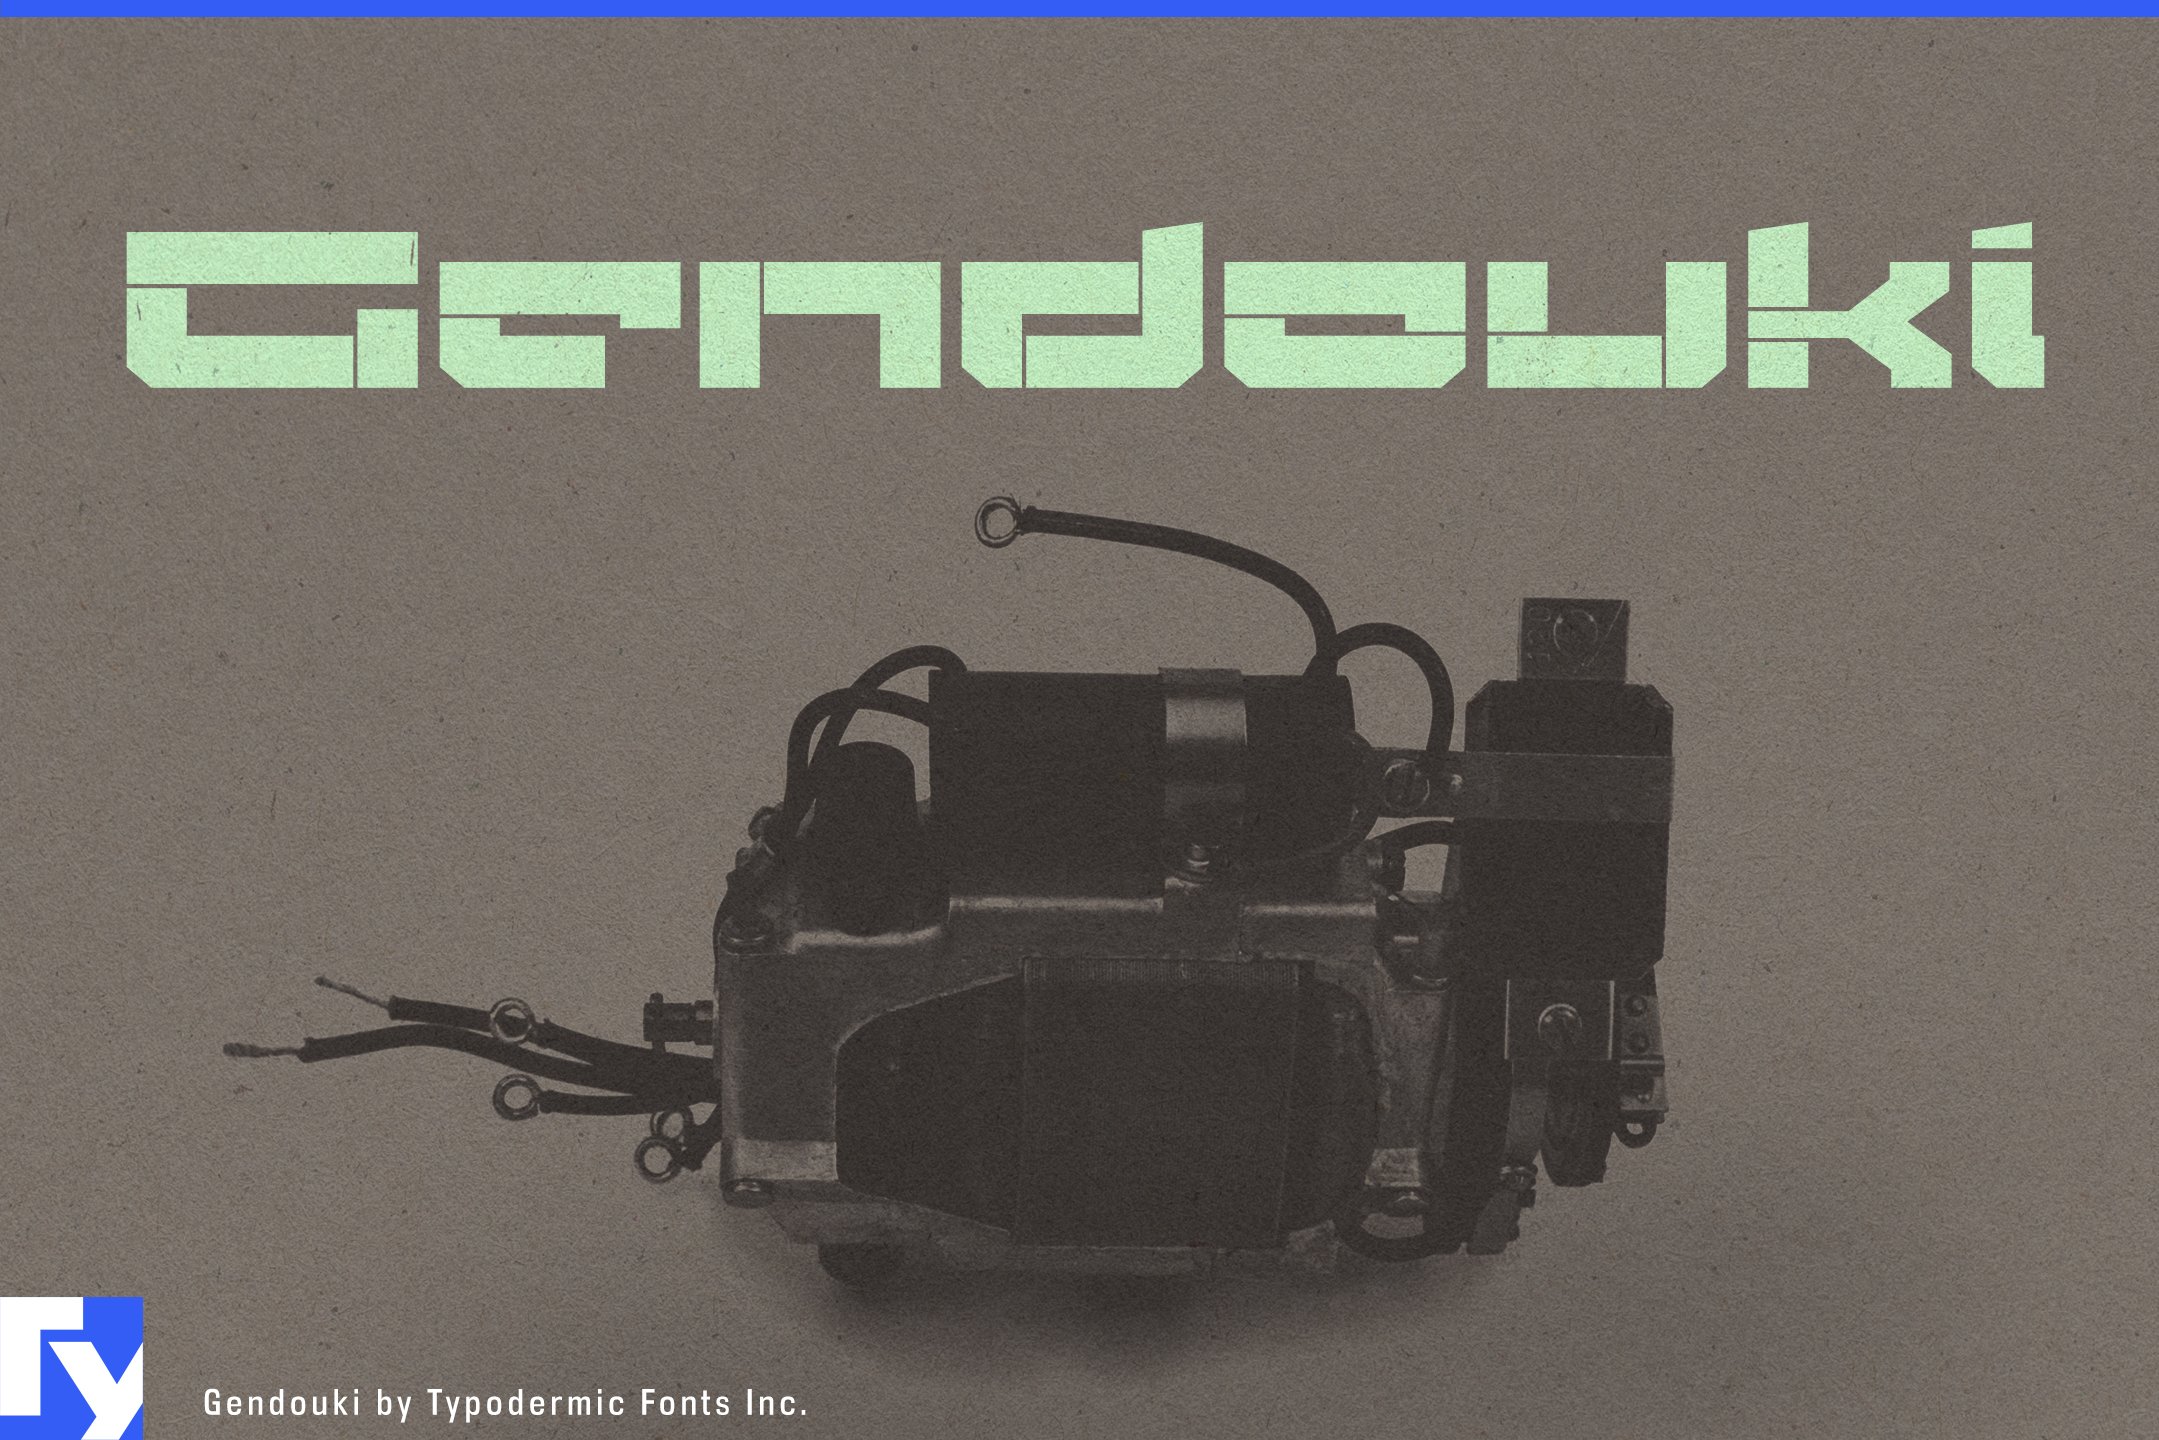 Gendouki cover image.